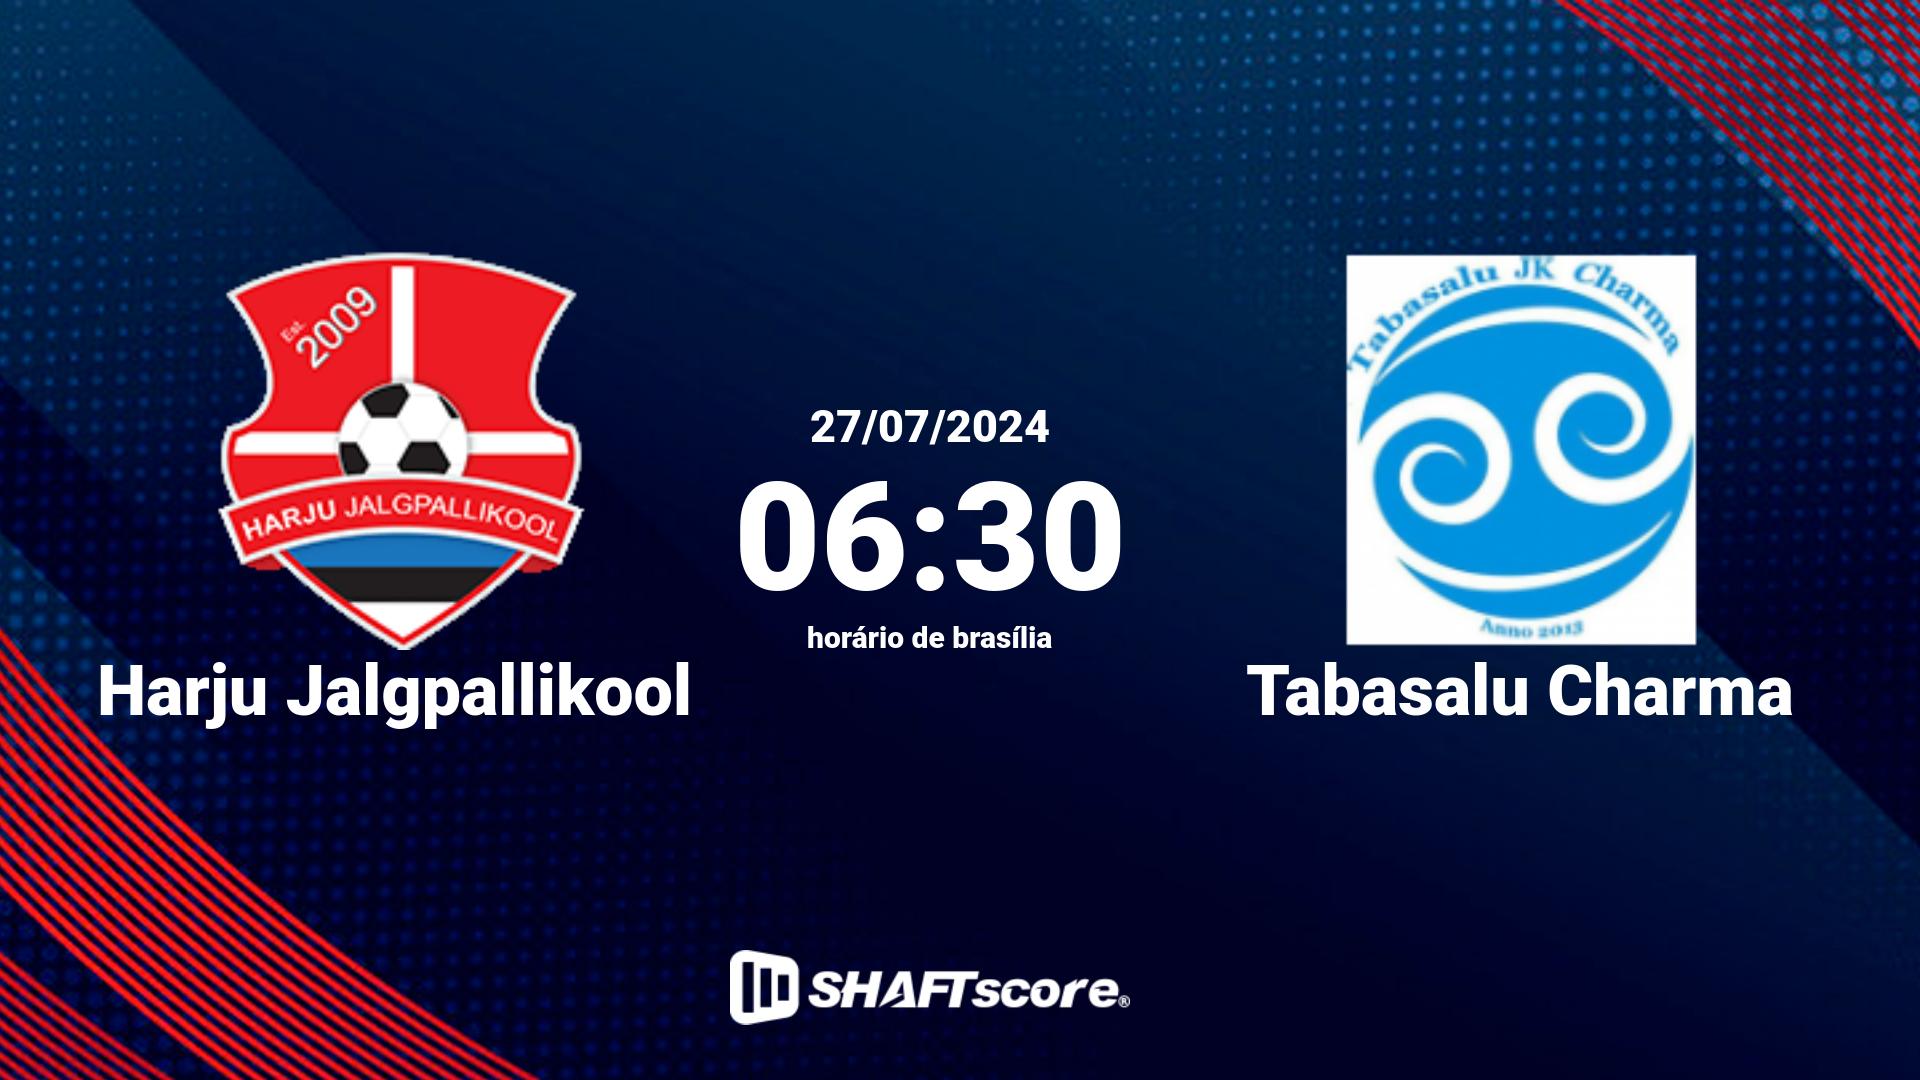 Estatísticas do jogo Harju Jalgpallikool vs Tabasalu Charma 27.07 06:30